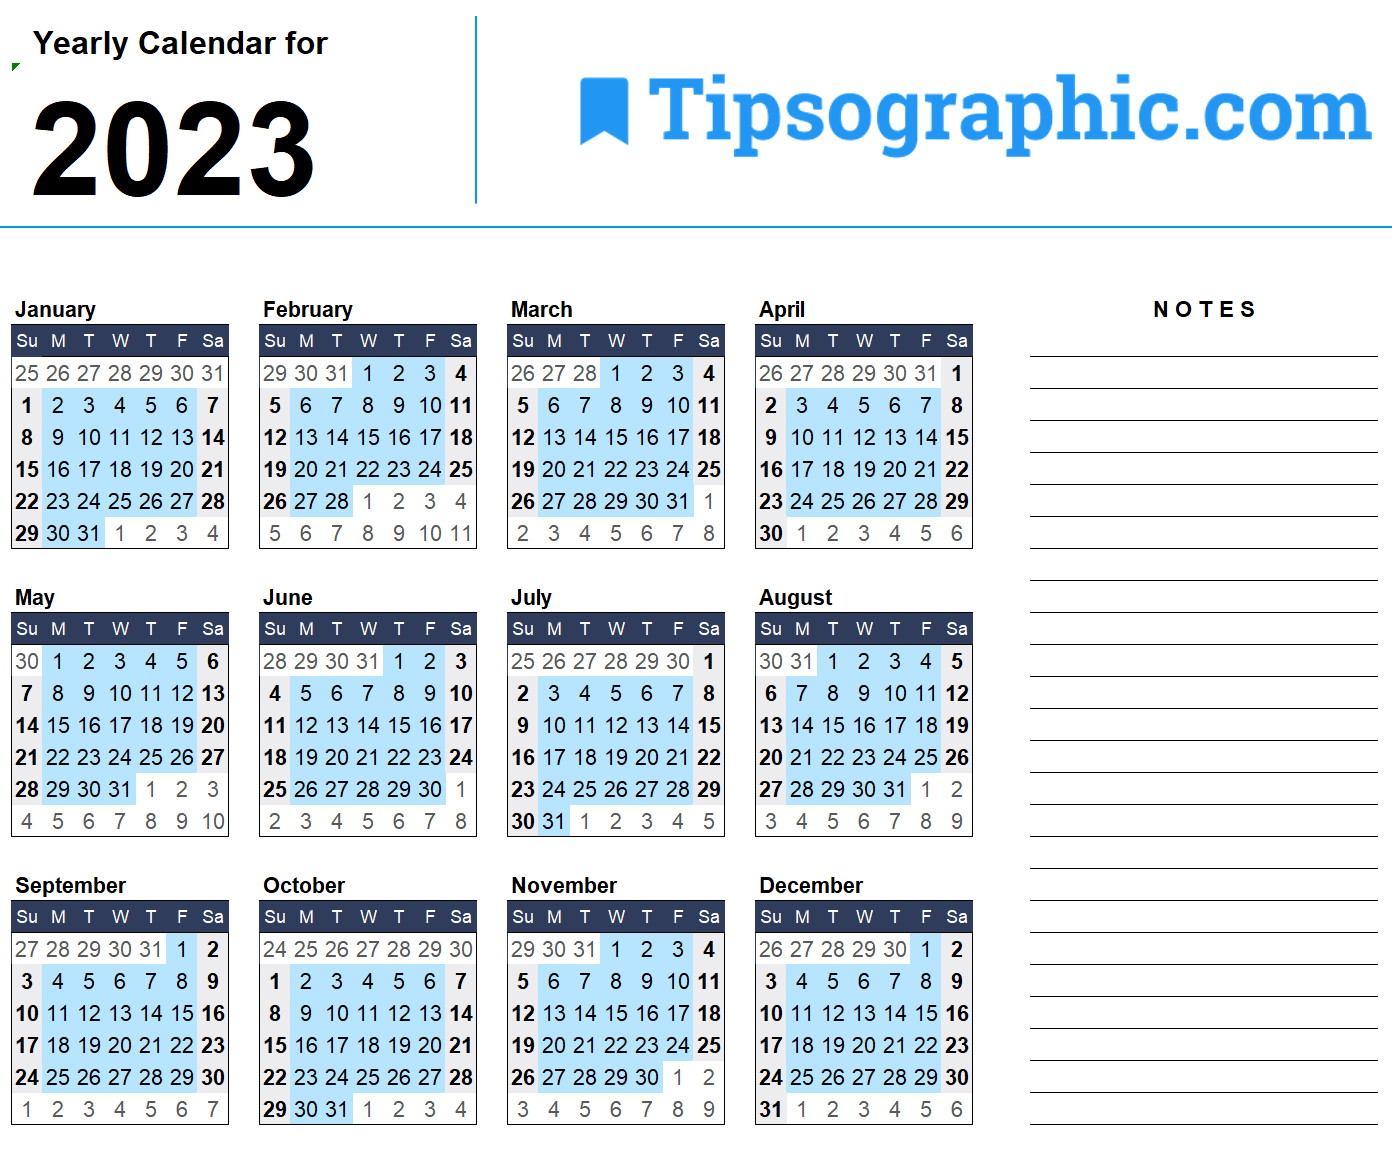 Calendar 2023 Calendar Sa Time And Date Calendar 2023 Canada